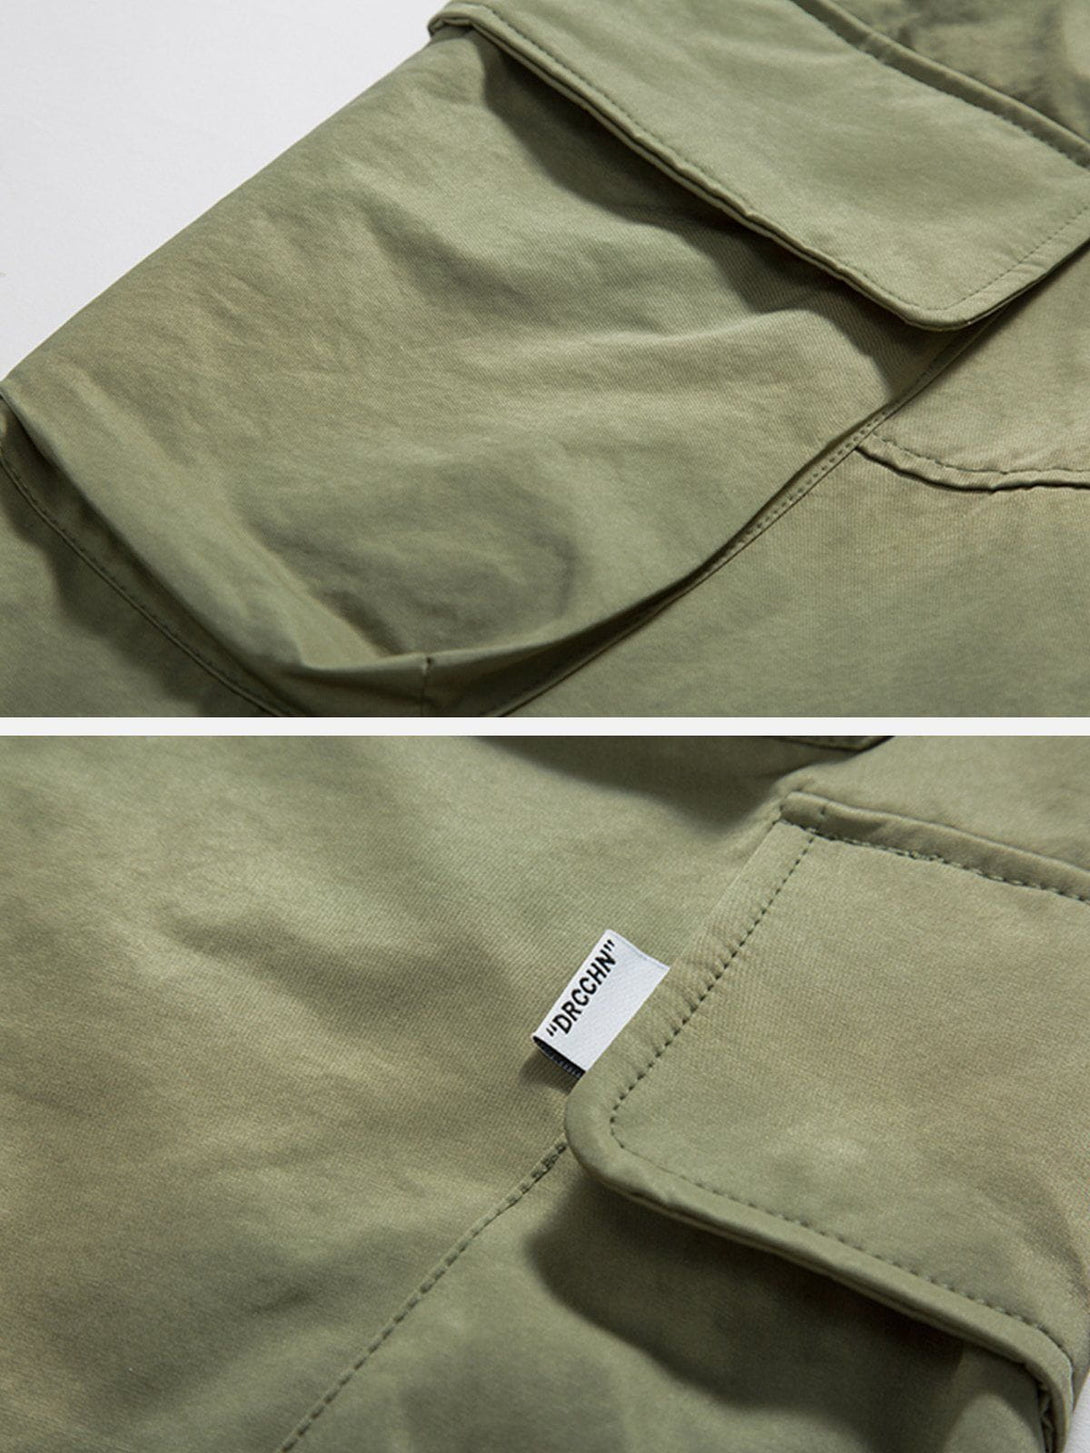 Majesda® - Multi-Pocket Cargo Pants outfit ideas streetwear fashion